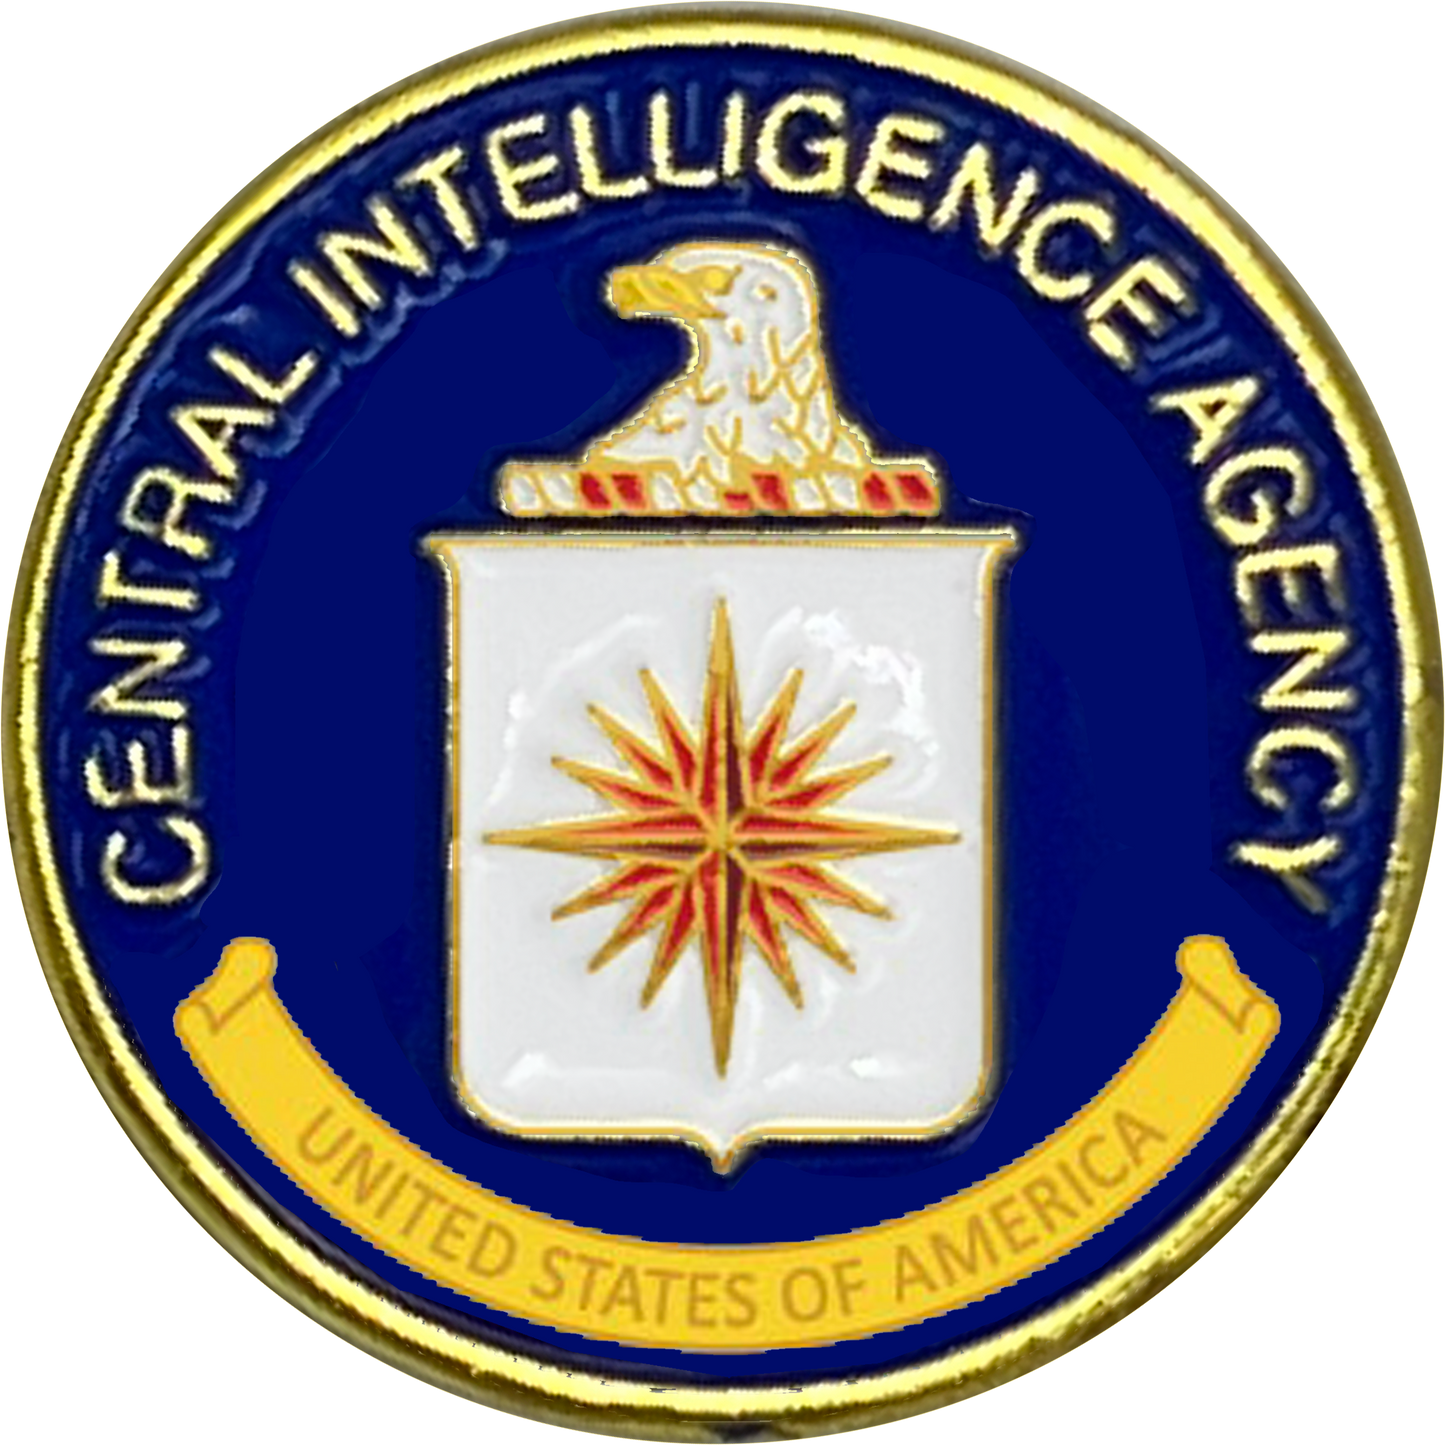 BFP-010 CIA Central Intelligence Agency Lapel Pin